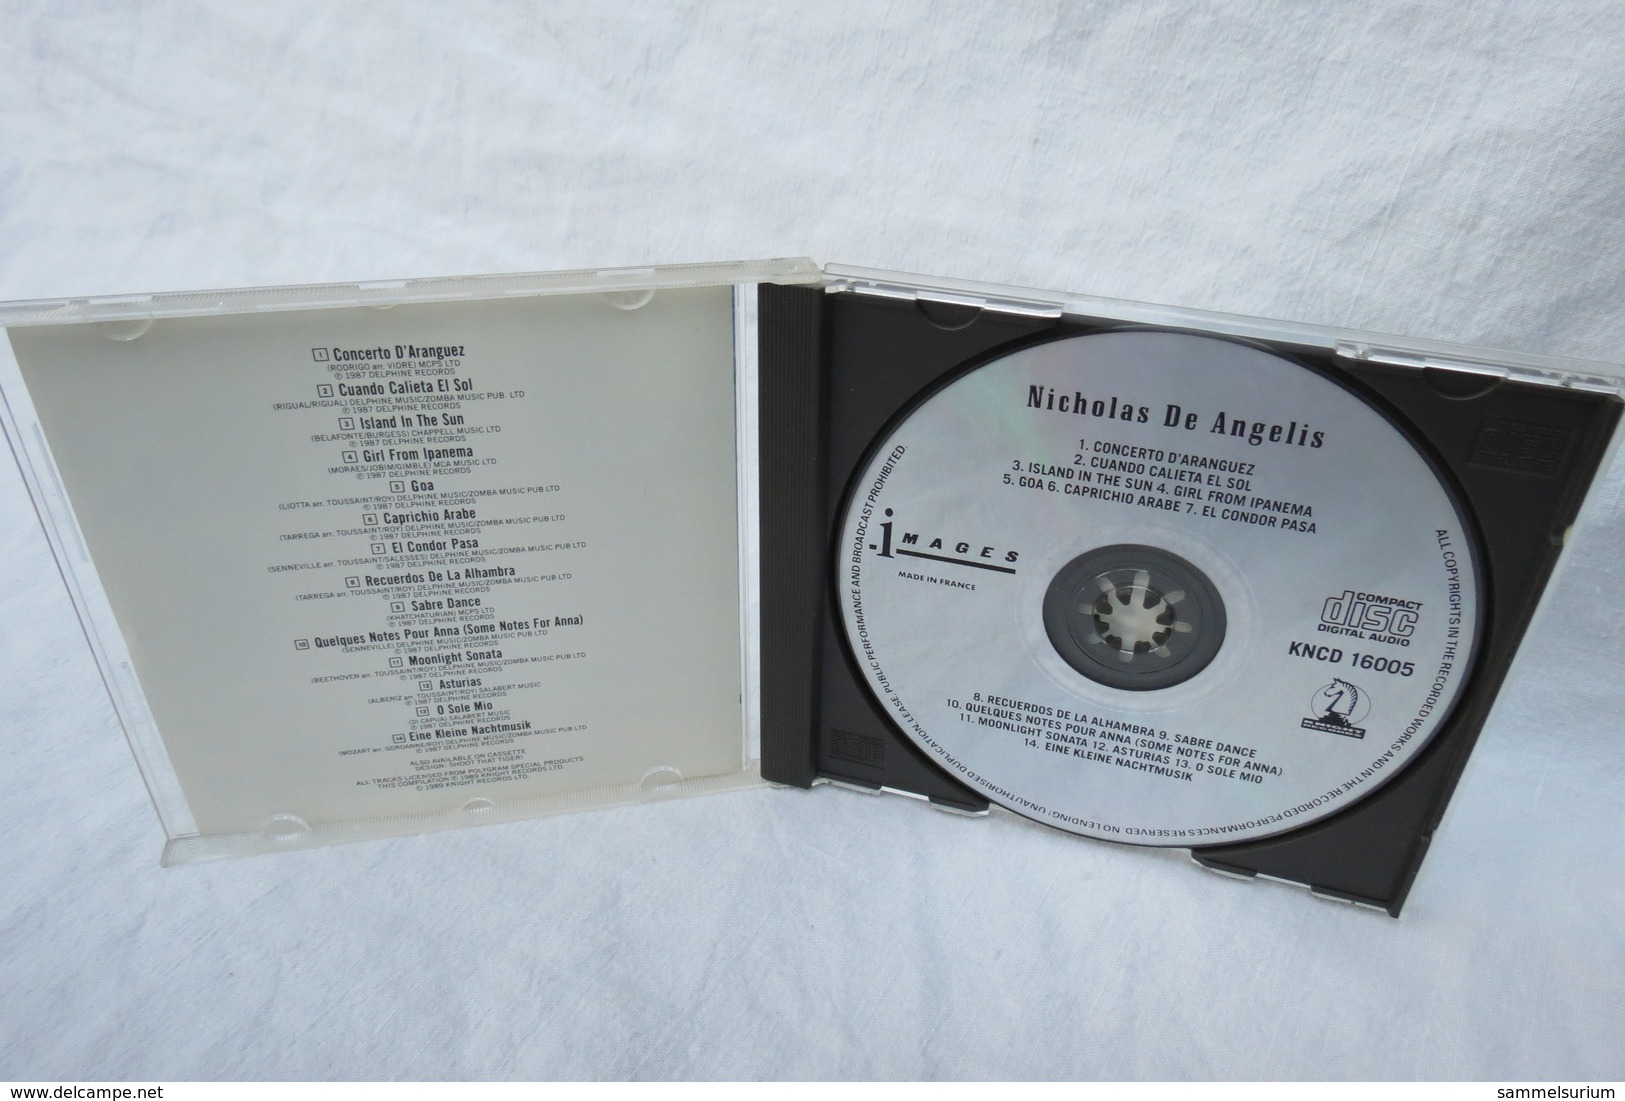 CD "Nicholas De Angelis" Images - Instrumental